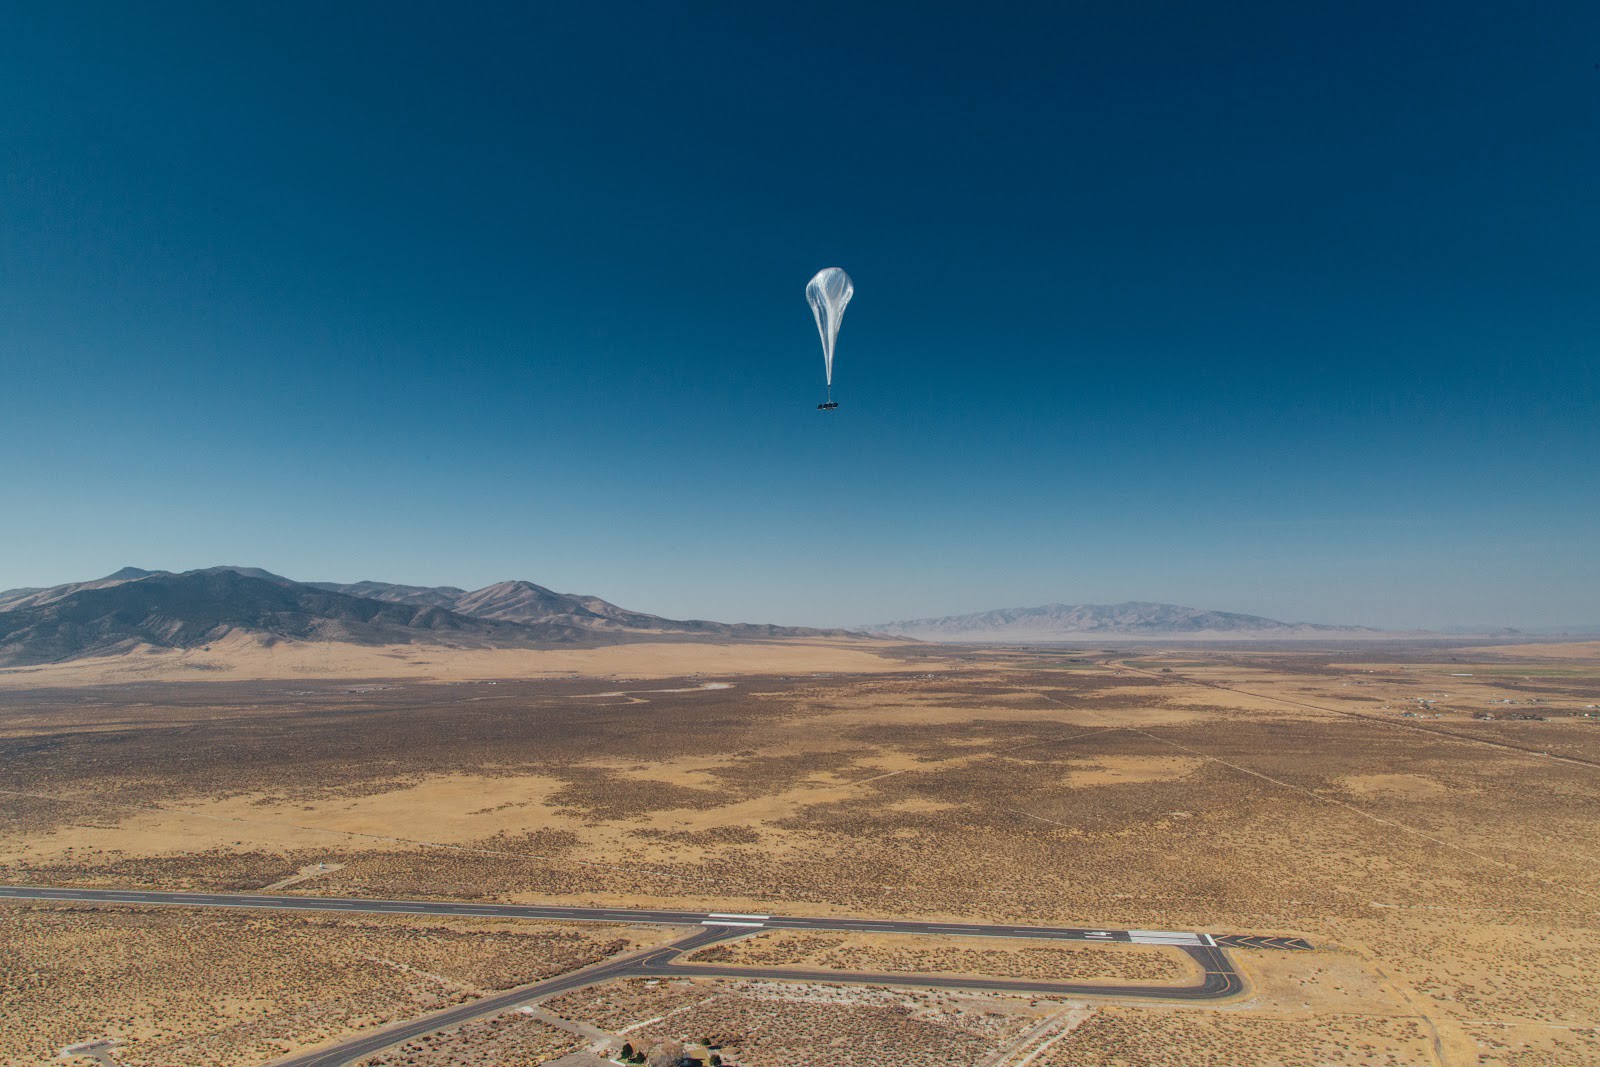 Dona do Google encerra projeto Loon de balões de internet